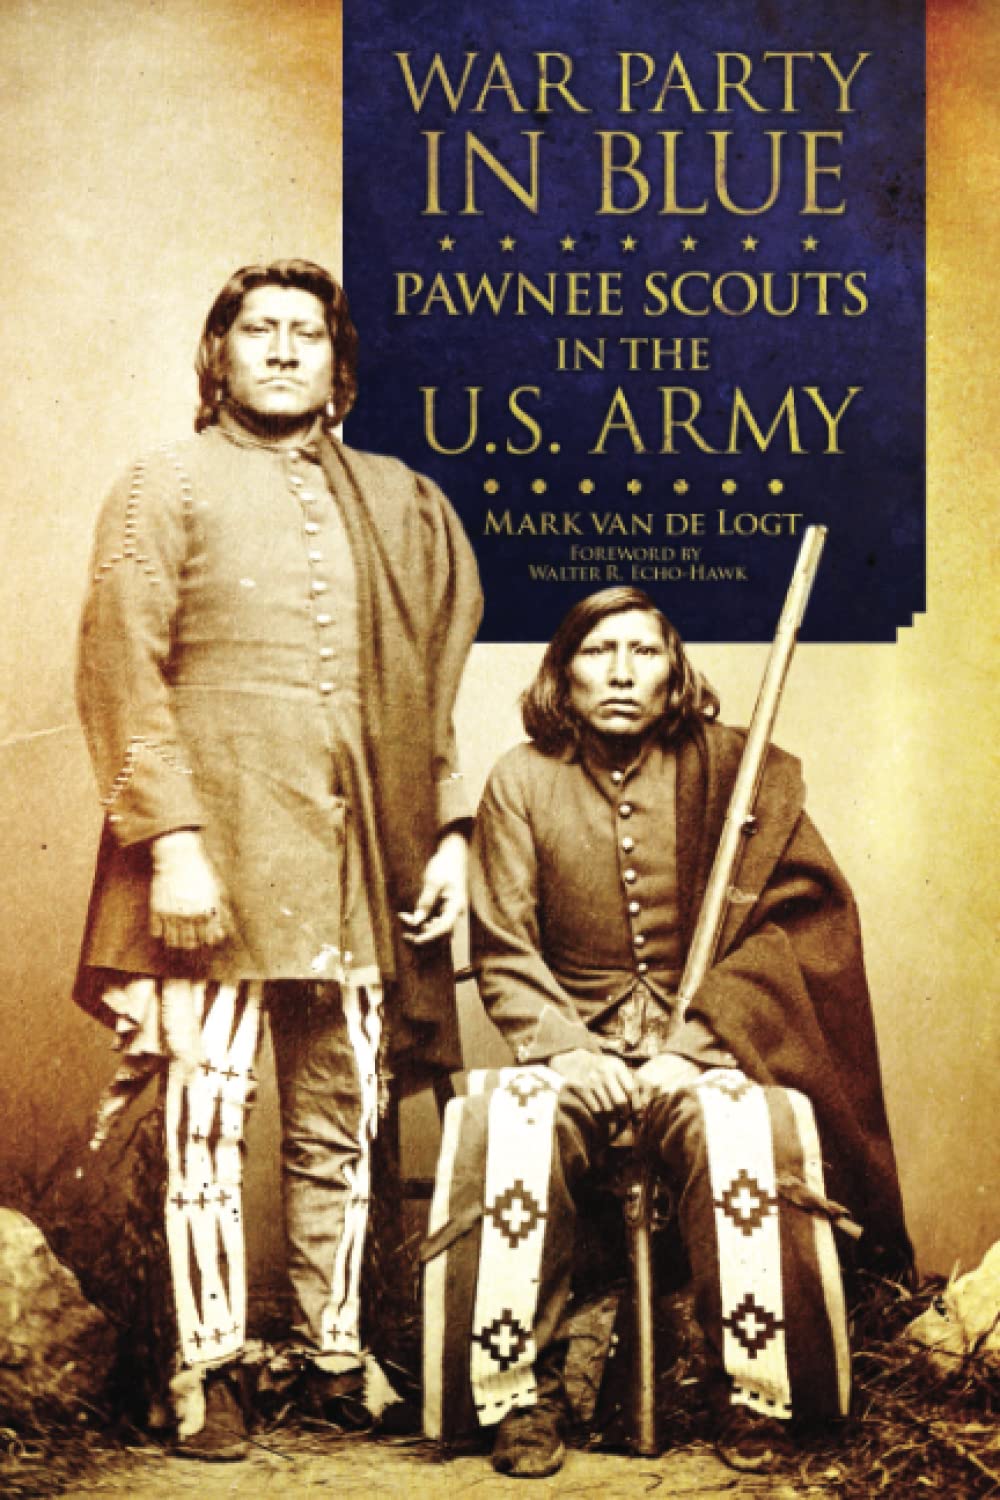 War Party in Blue: Pawnee Scouts in the U.S. Army by Mark Van de Logt